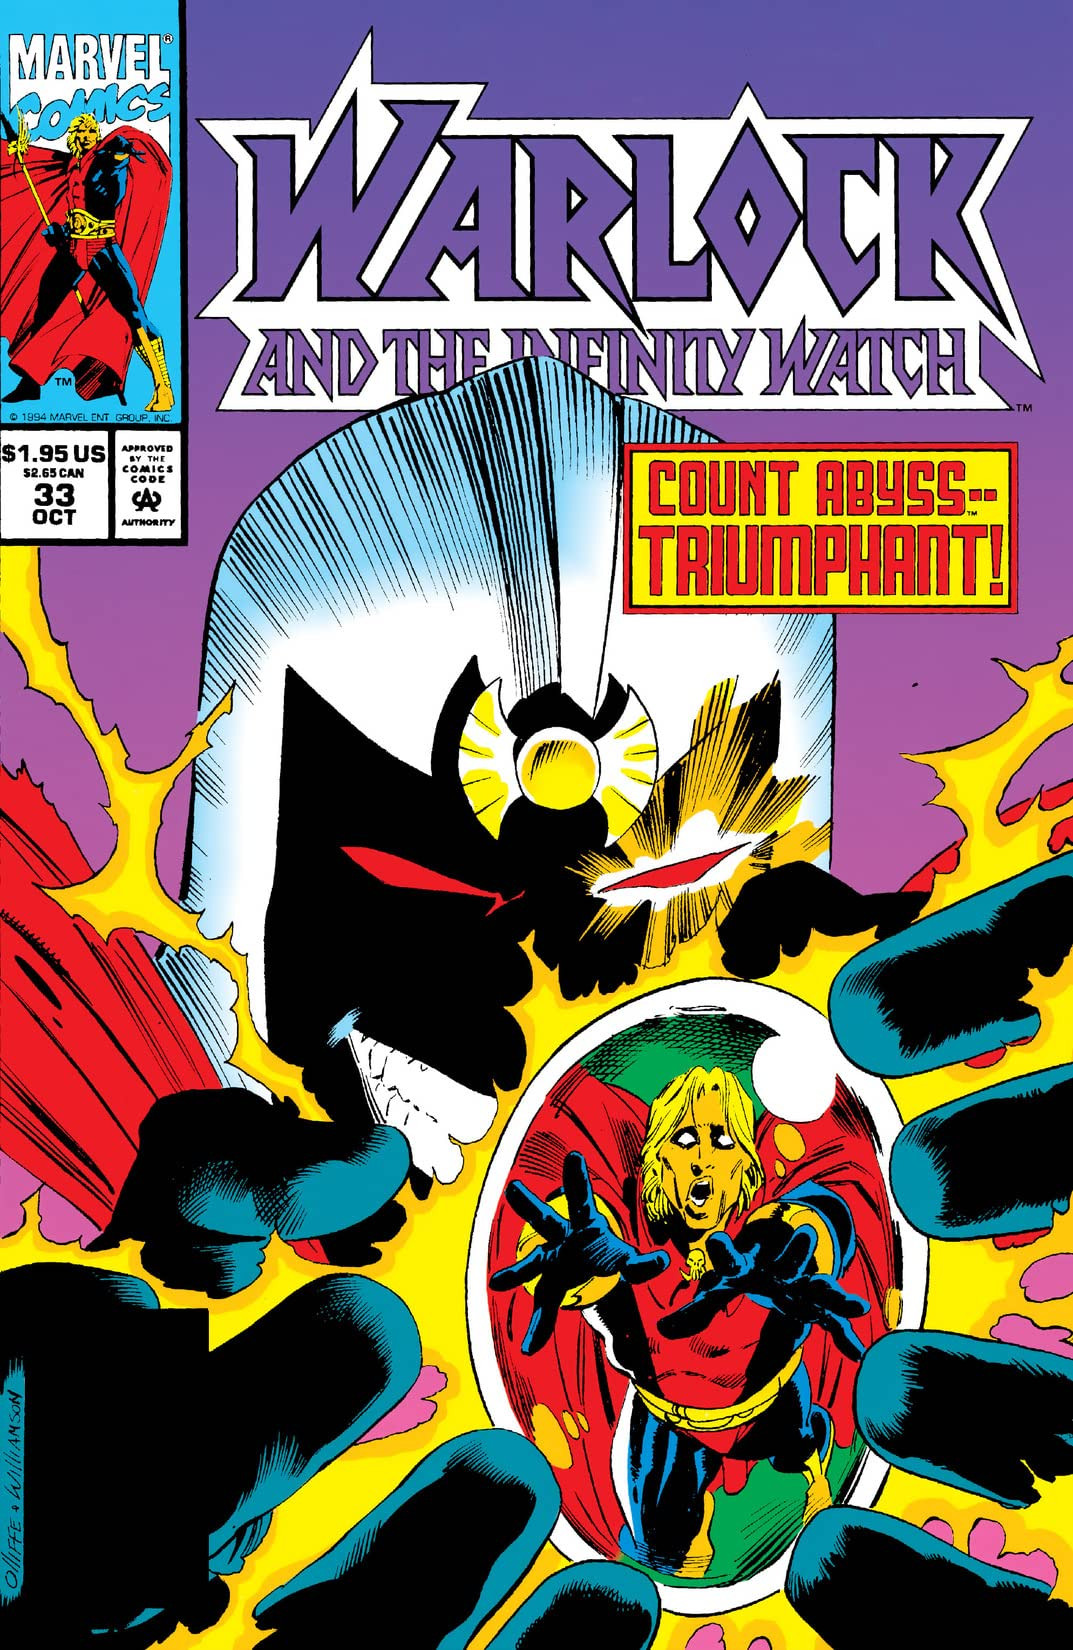 Warlock and the Infinity Watch Vol 1 42 | Marvel Database | Fandom